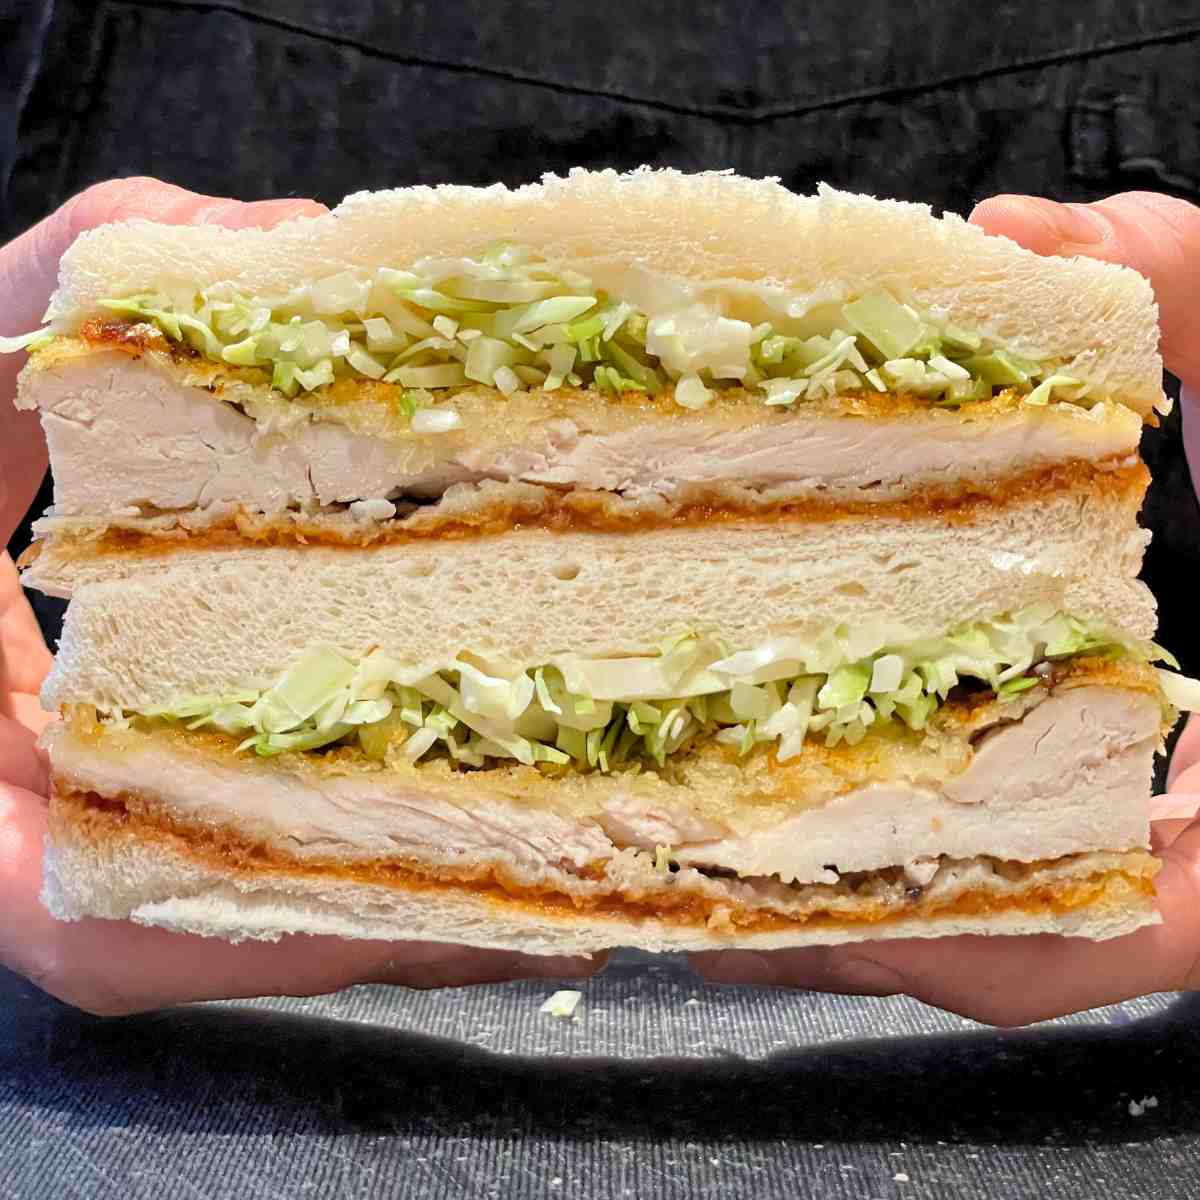 Japanese fried chicken cutlet sandwich